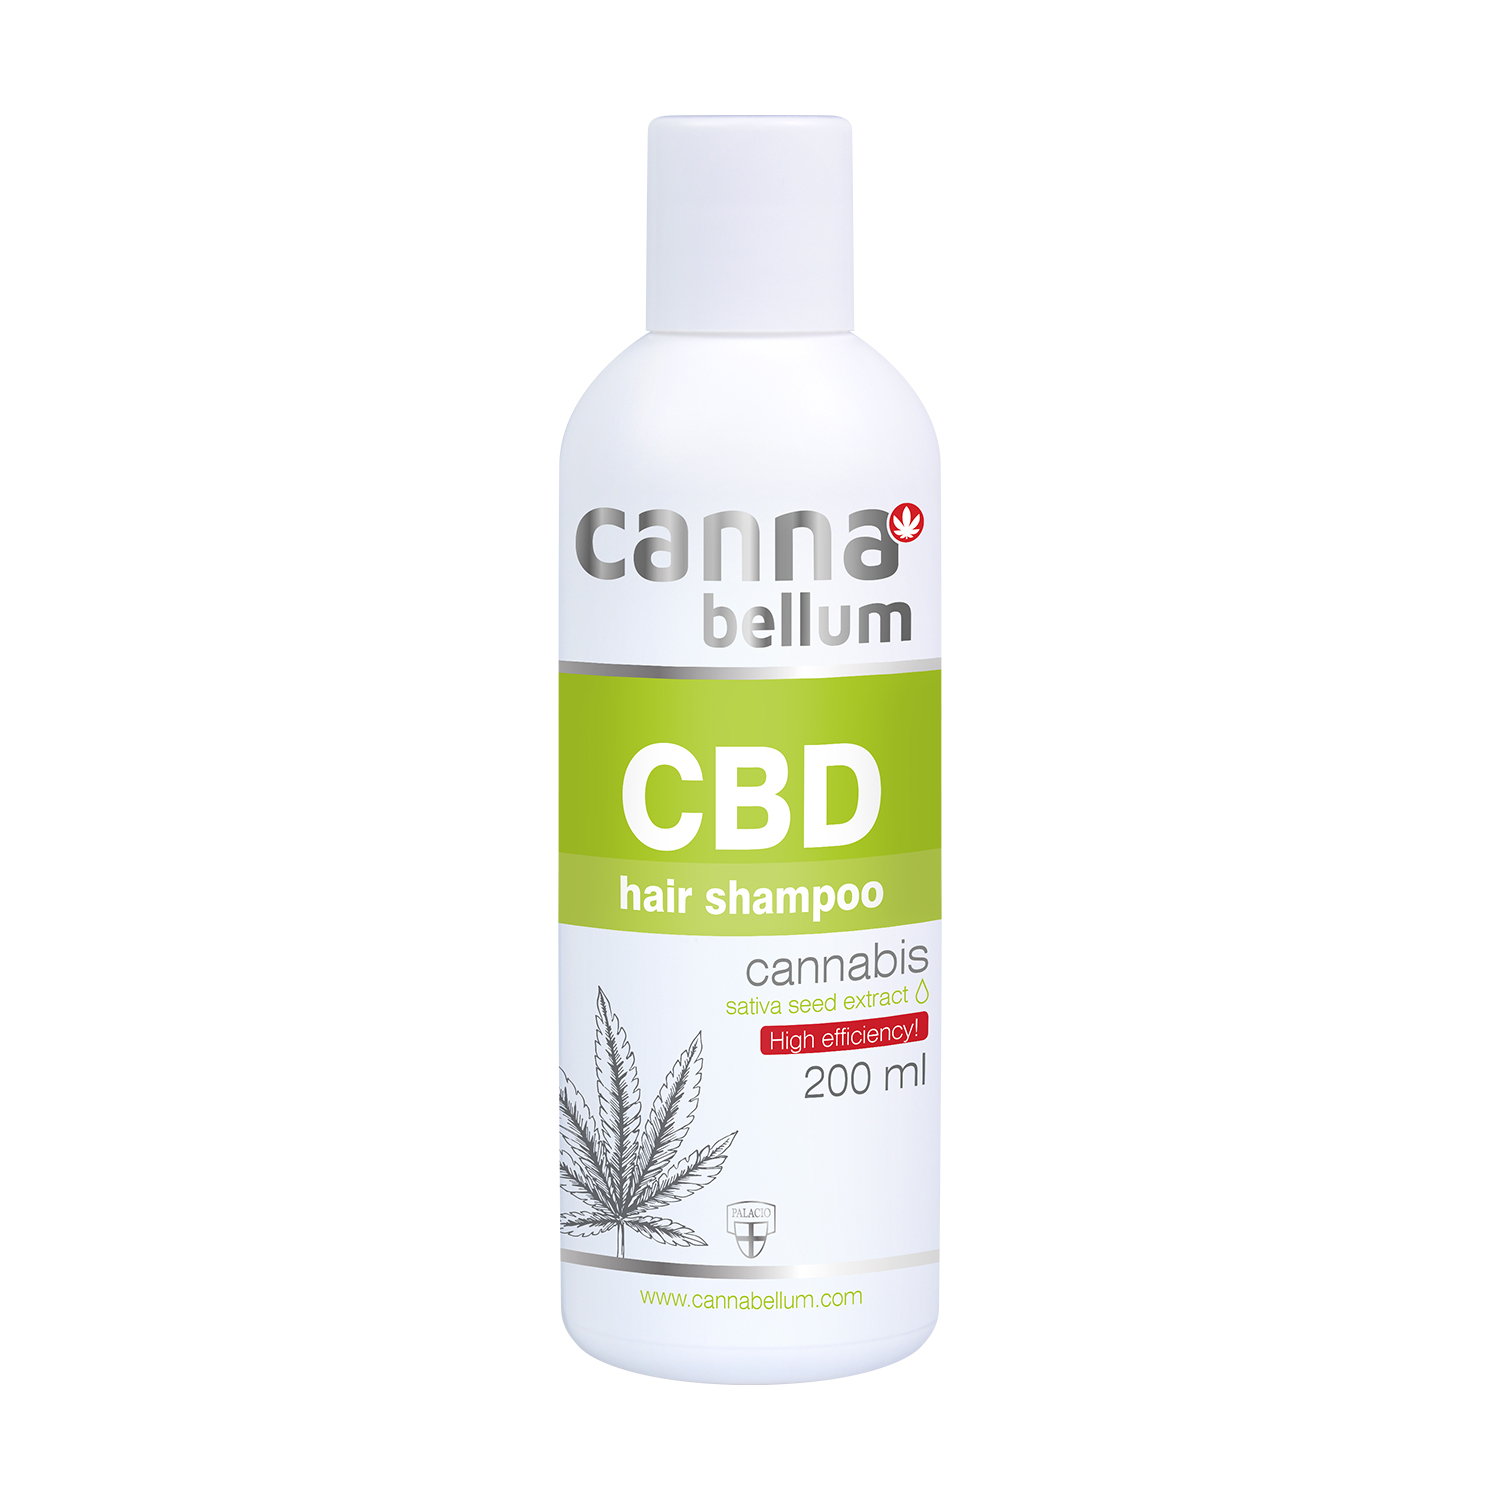 Cannabellum CBD hair shampoo 200ml P1251 WEB 100